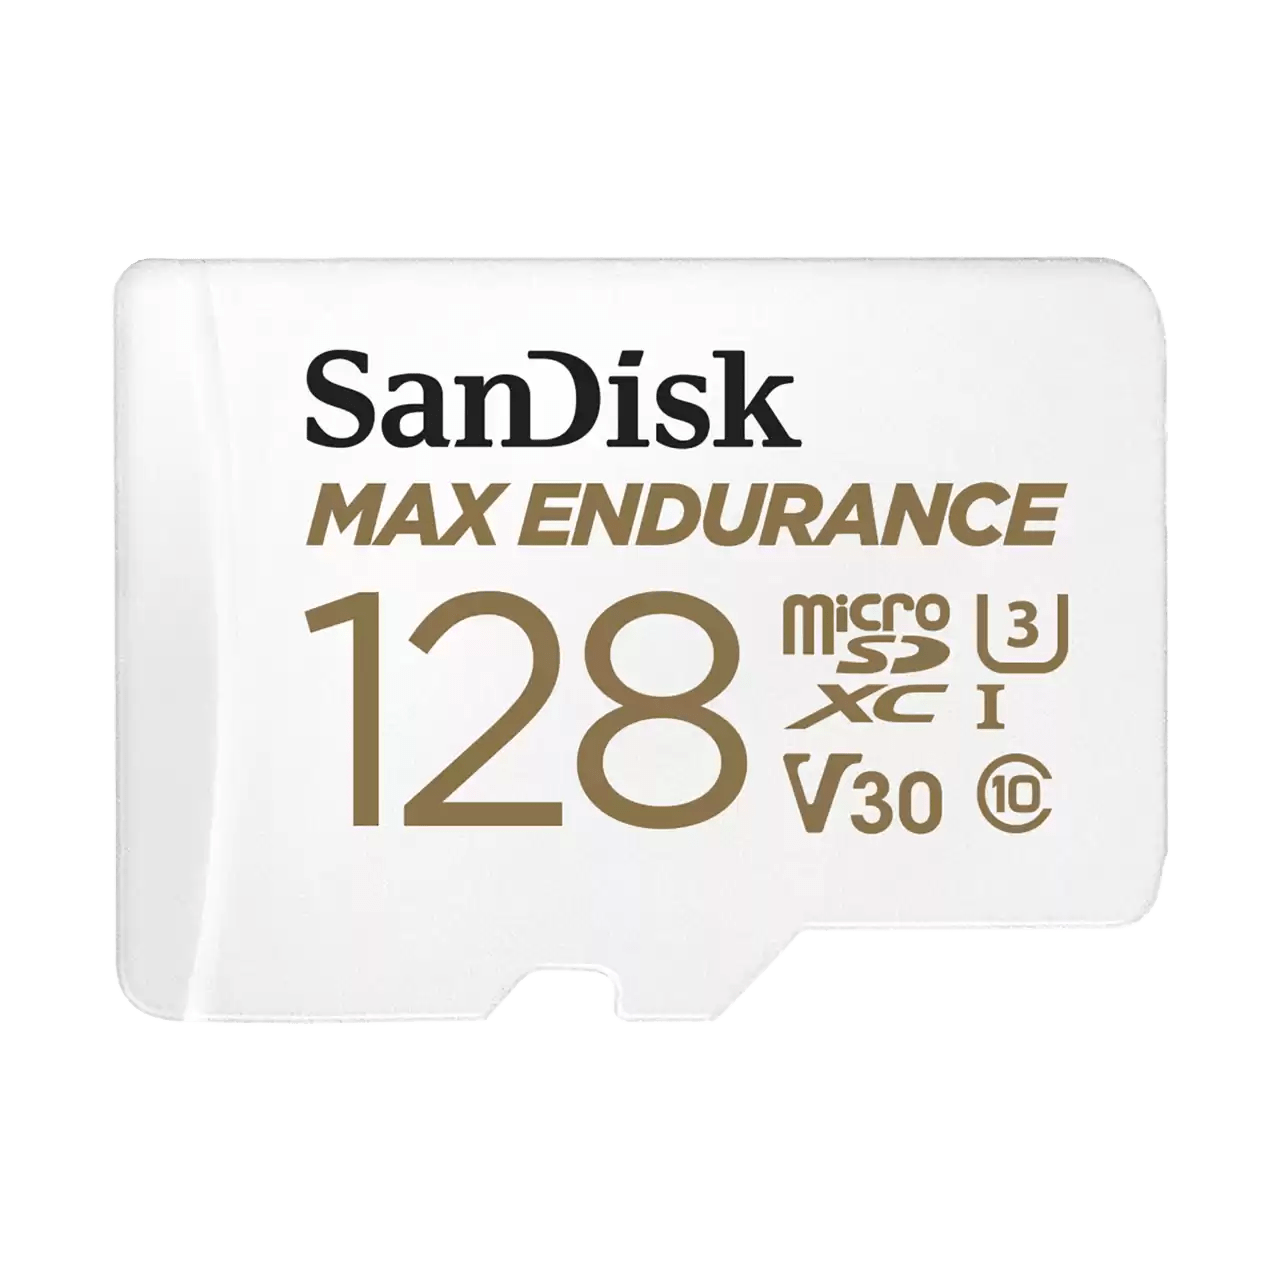 SanDisk Max Endurance 128GB V30 U3 C10 UHS - I microSDXC 記憶卡 (SDSQQVR - 128G - GN6IA) - Fever Electrics 電器熱網購平台